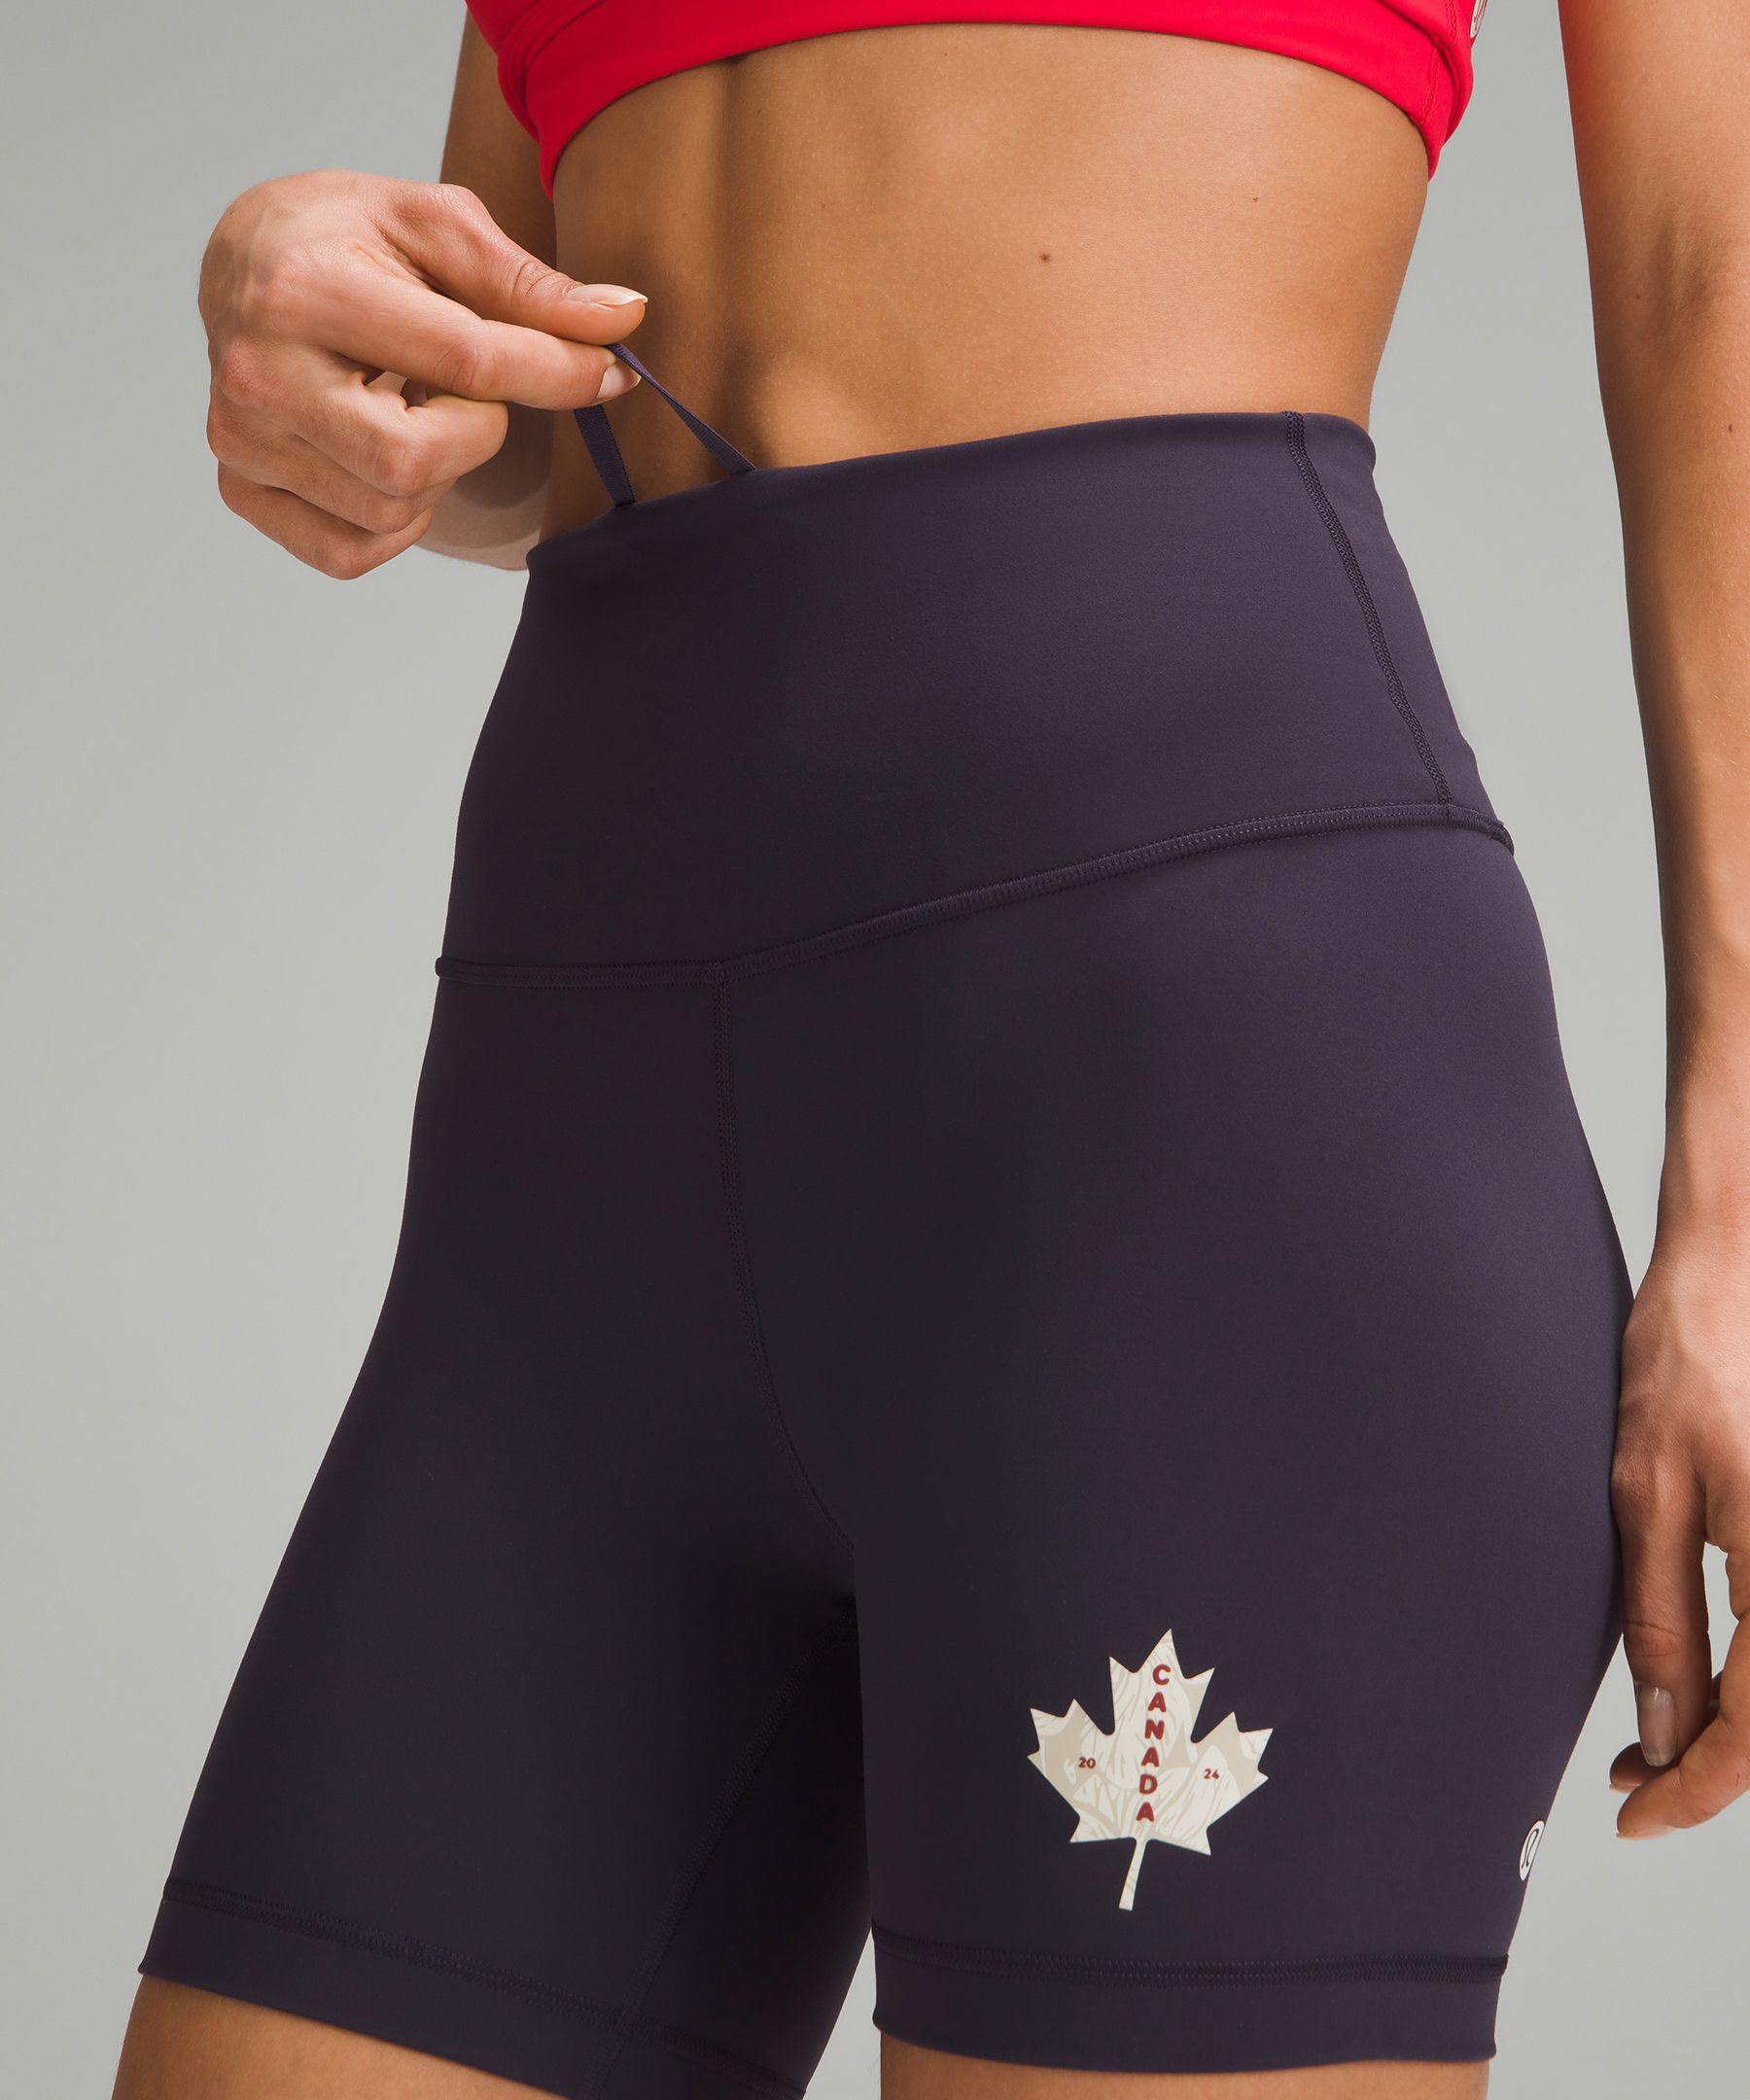 Team Canada Wunder Train High-Rise Short 6" *COC Logo | Women's Shorts